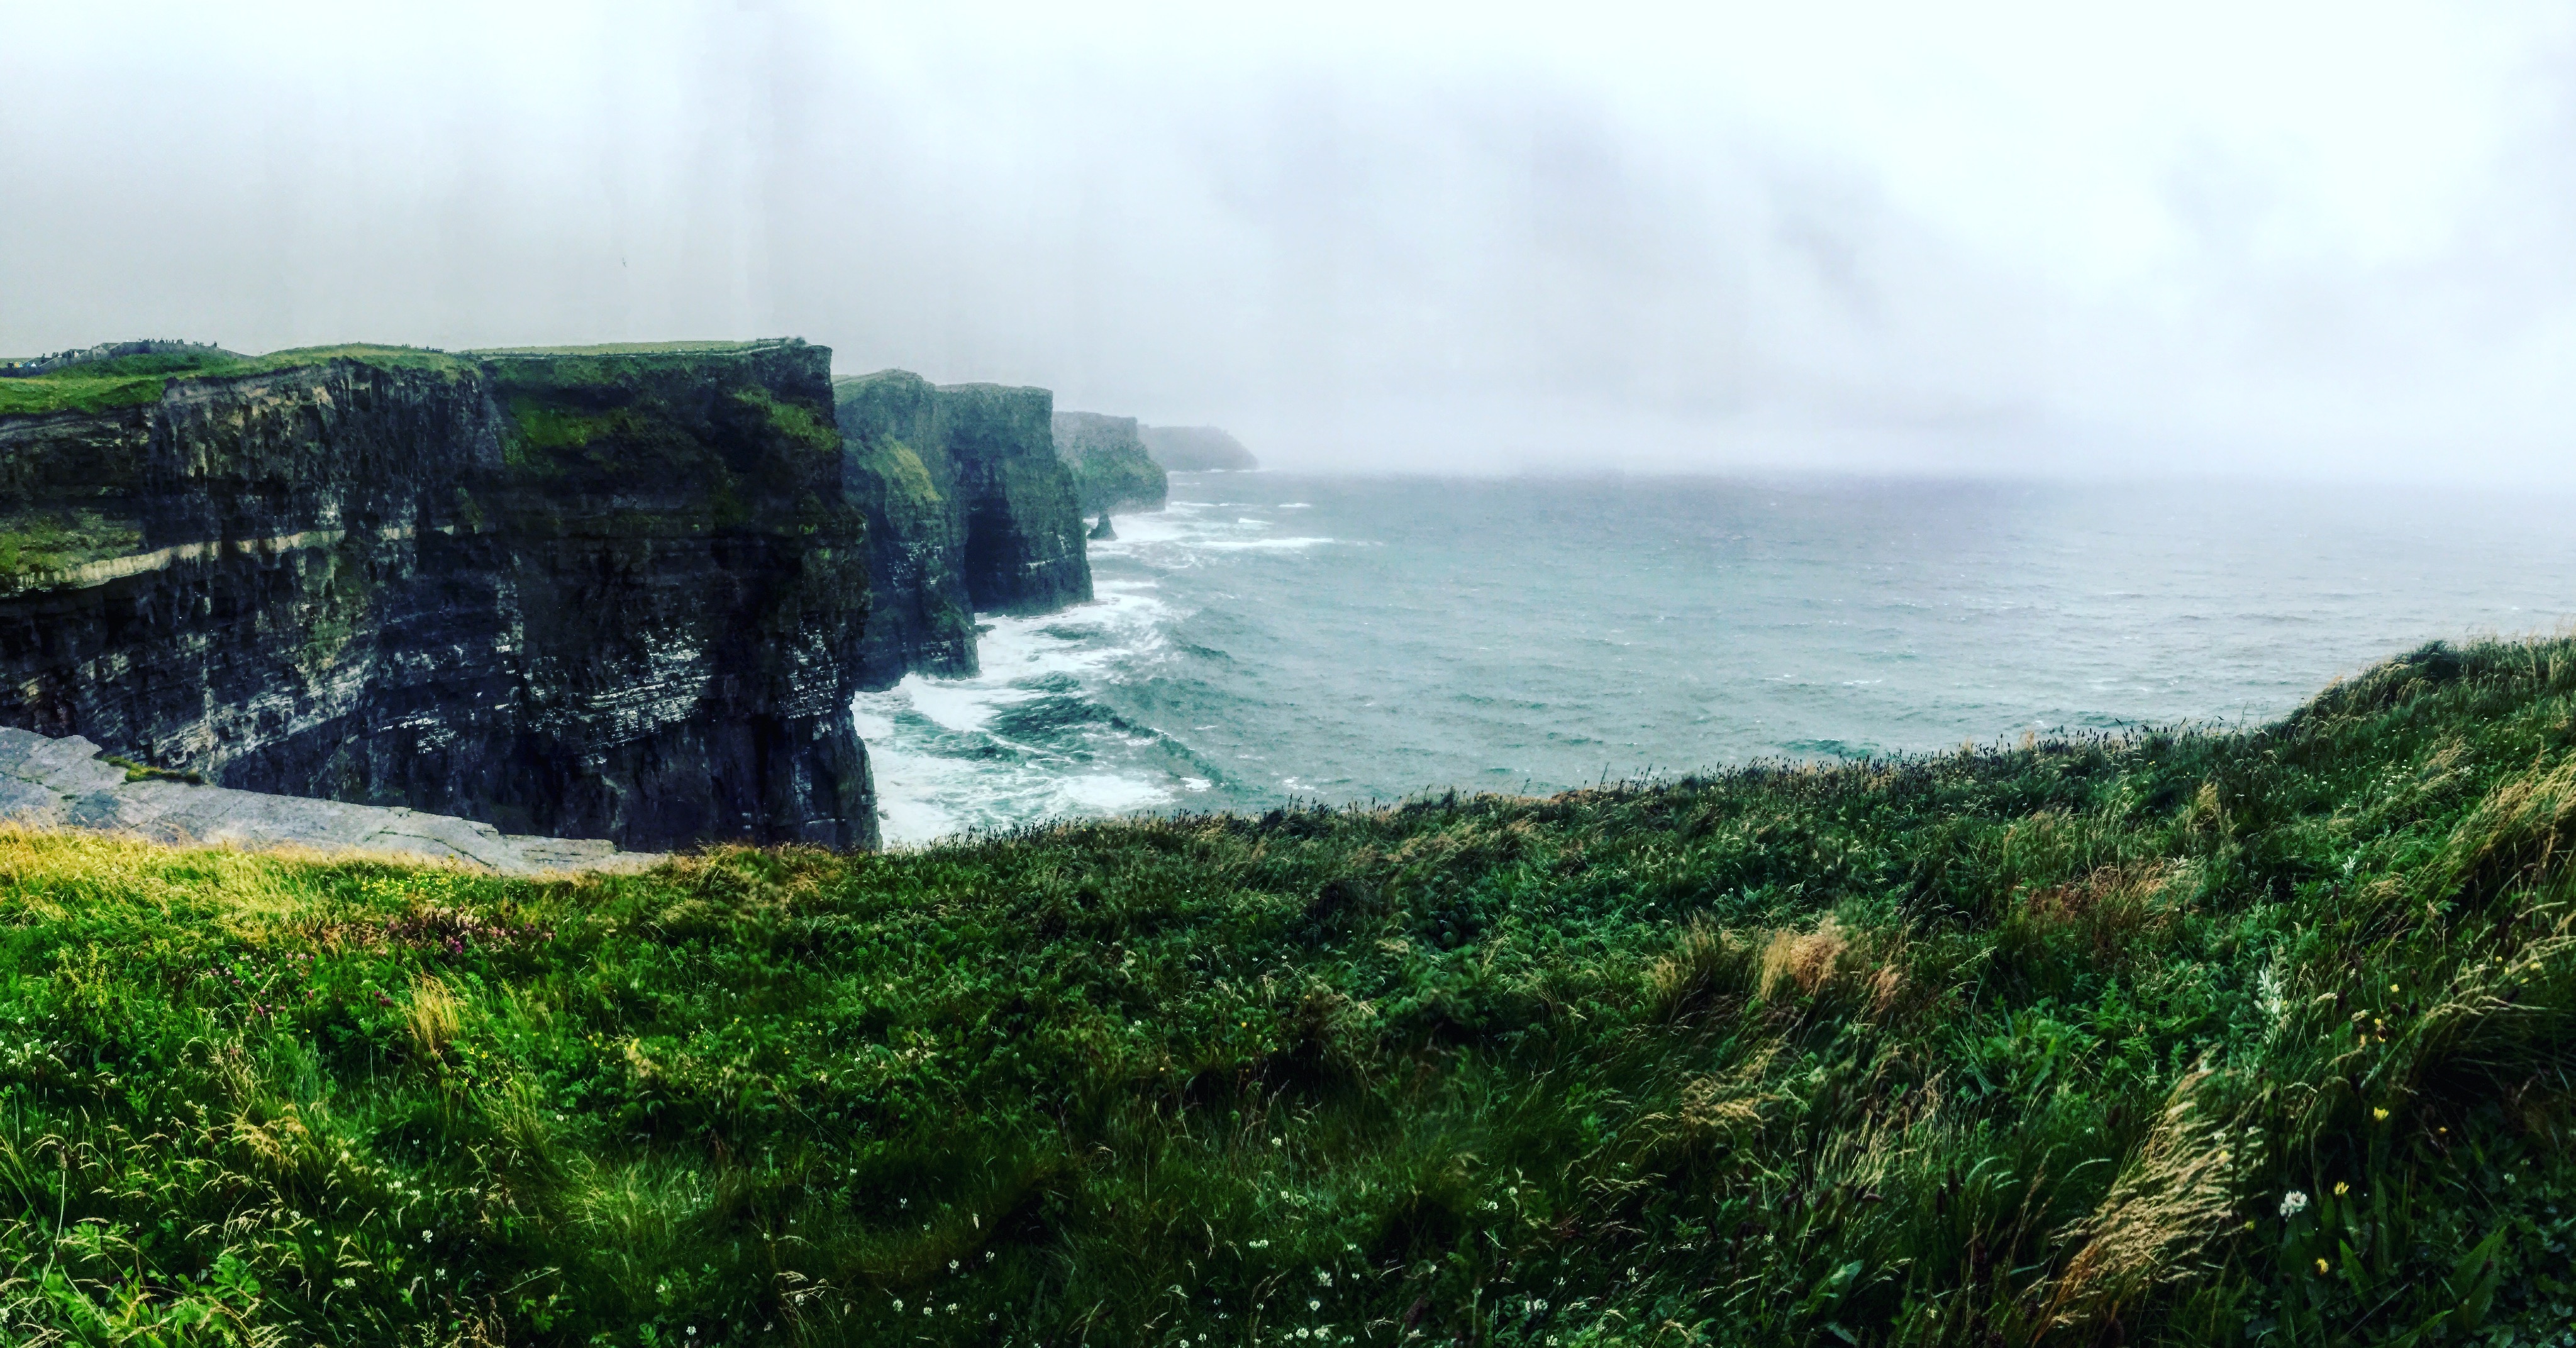 The Cliffs of Mohr in Ireland